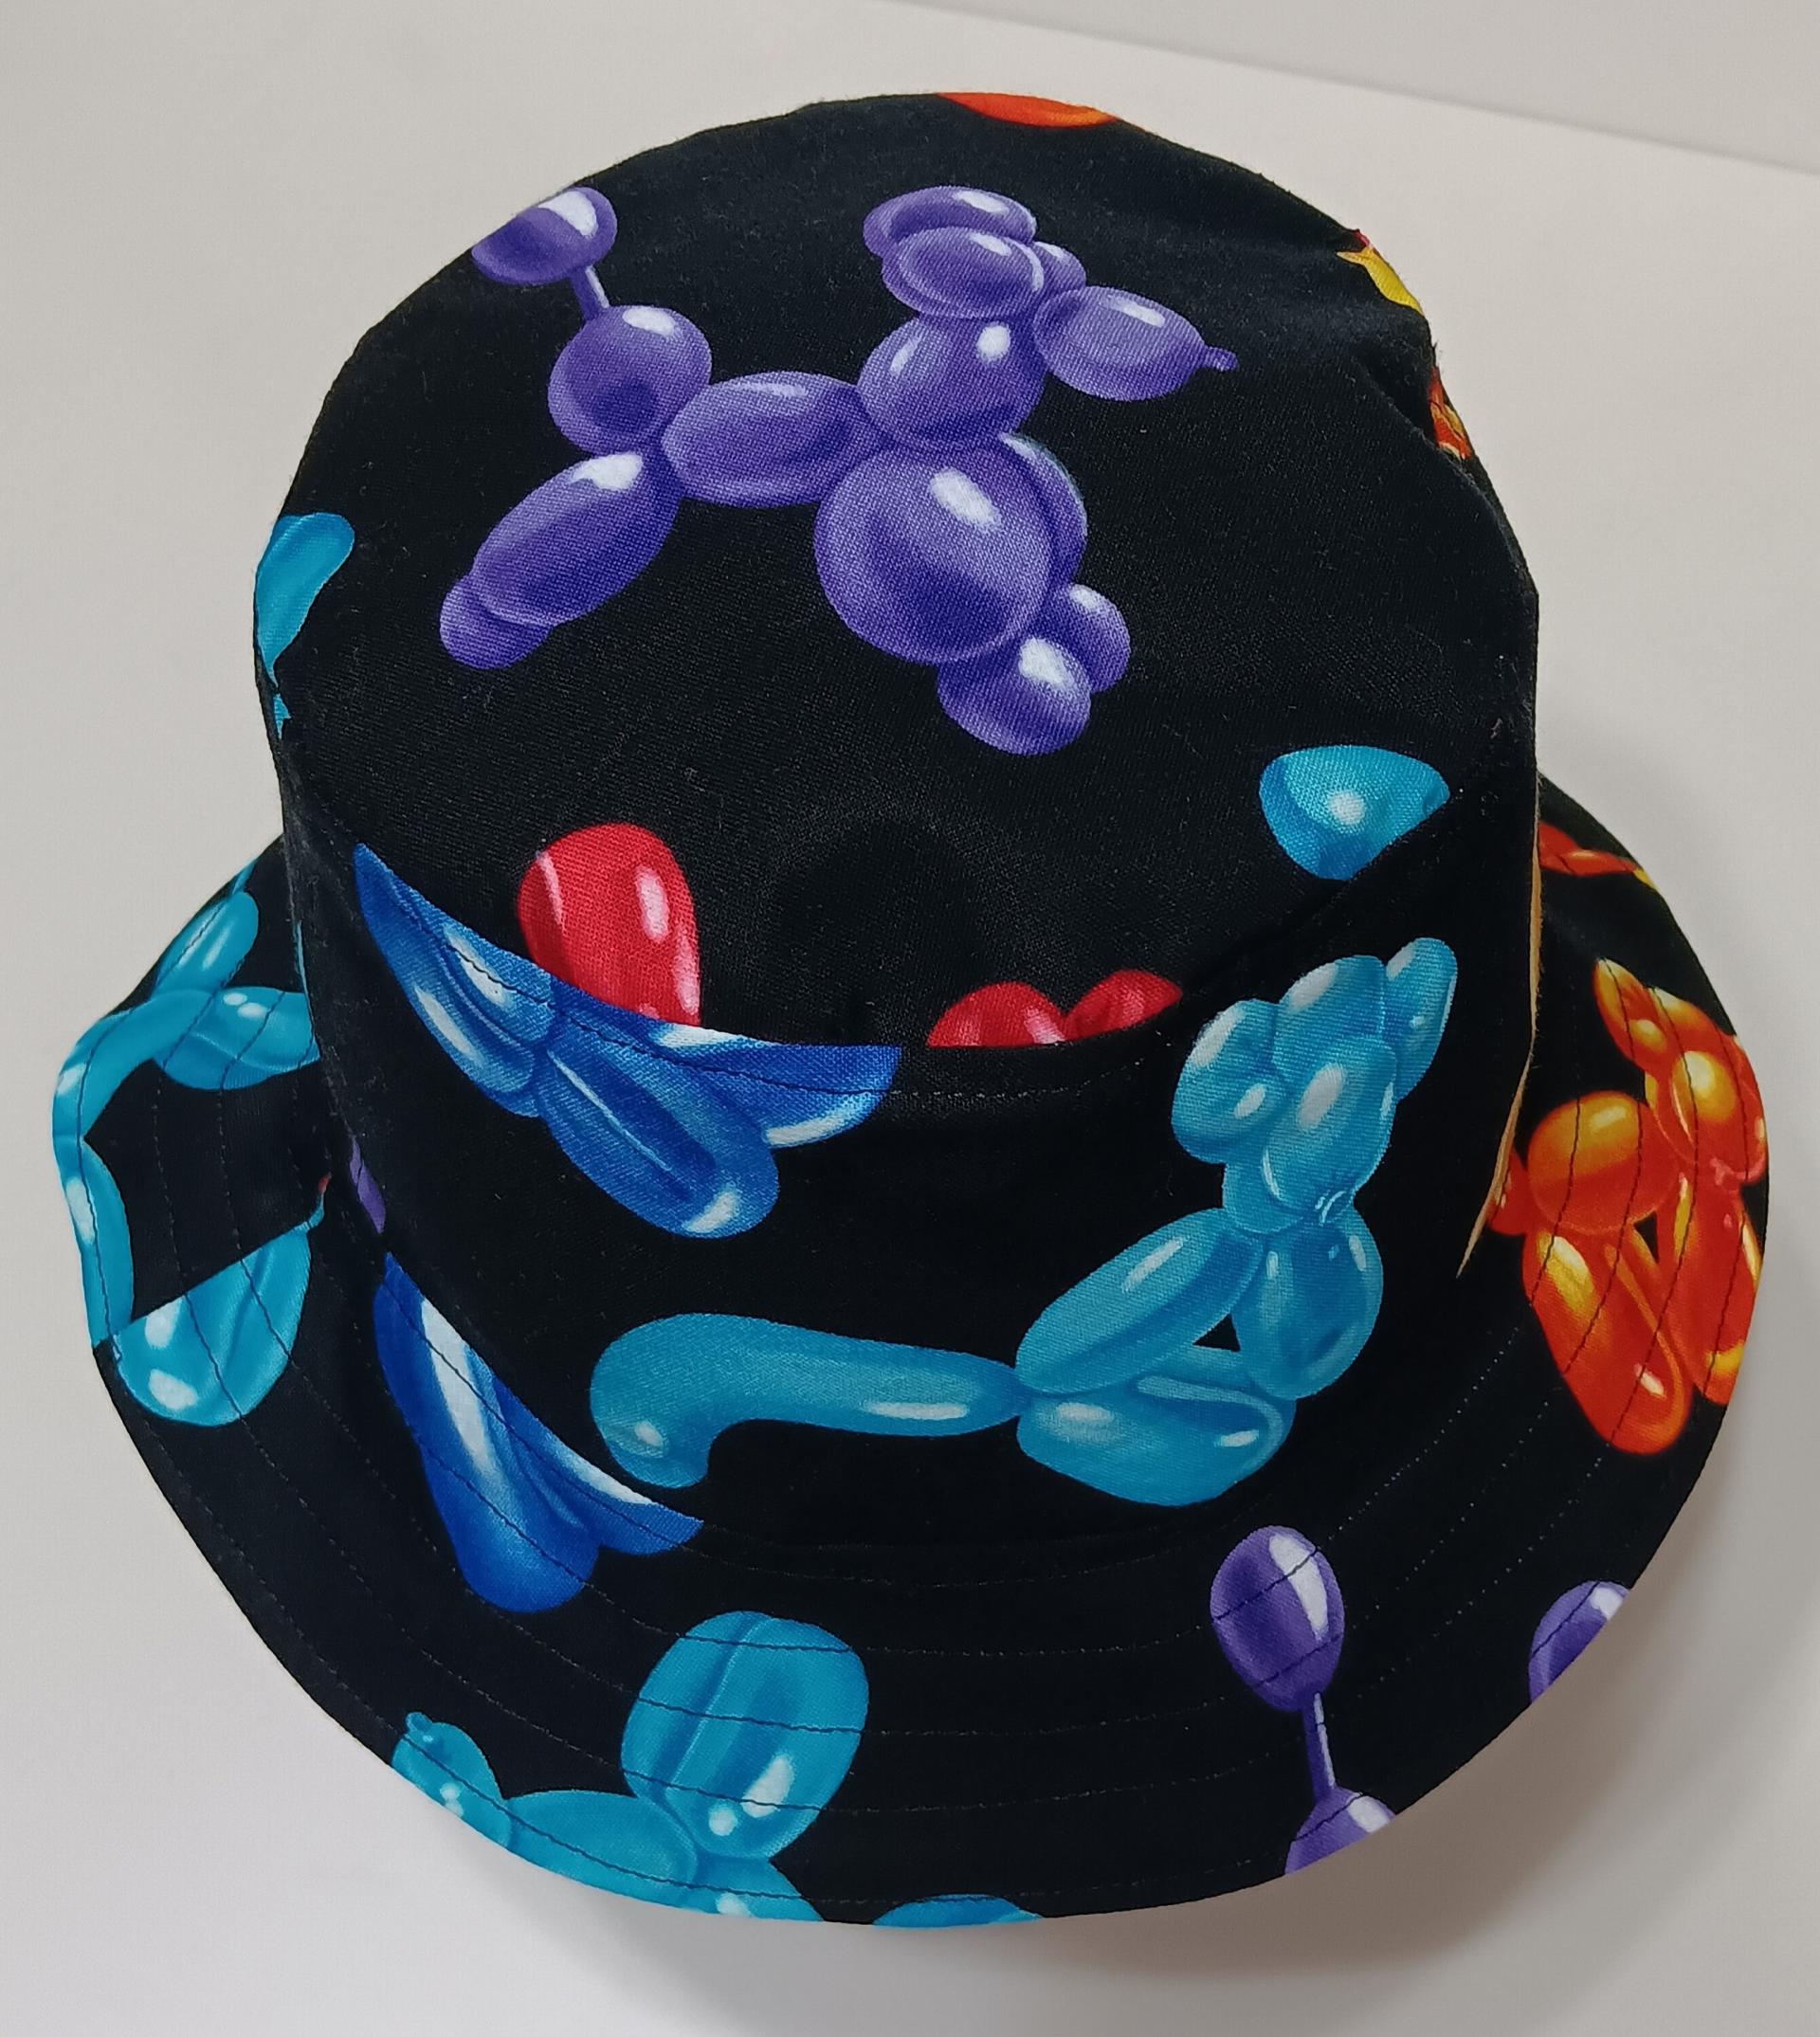 Balloon Animals Bucket Hat, Reversible, Sizes S-XXL, cotton, clowning hat, fishing hat, sun hat, floppy hat, festival hat, party hat